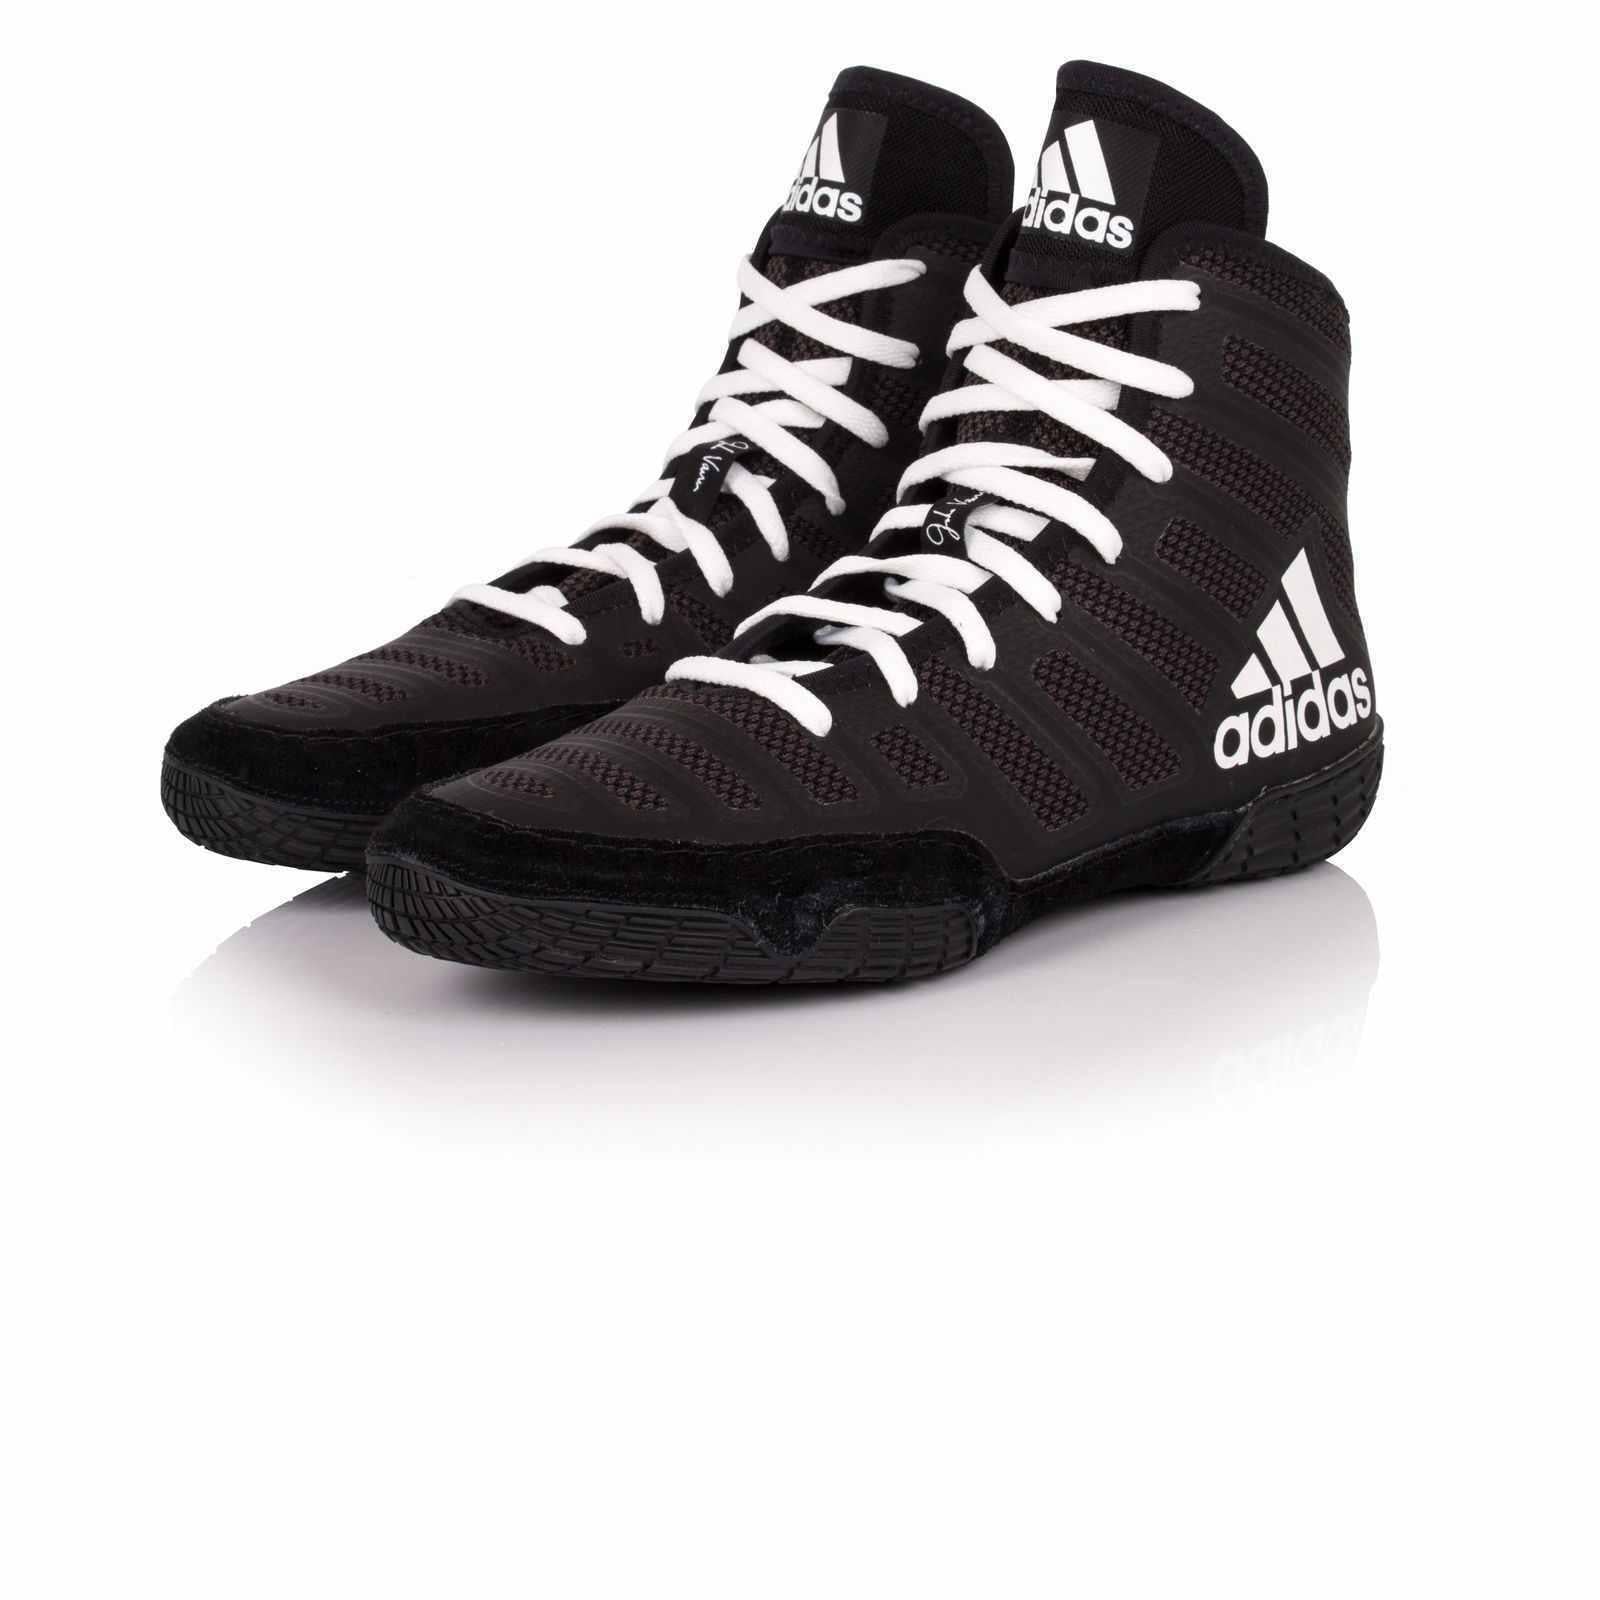 adidas Mens Adizero Varner Wrestling Shoes Black & White